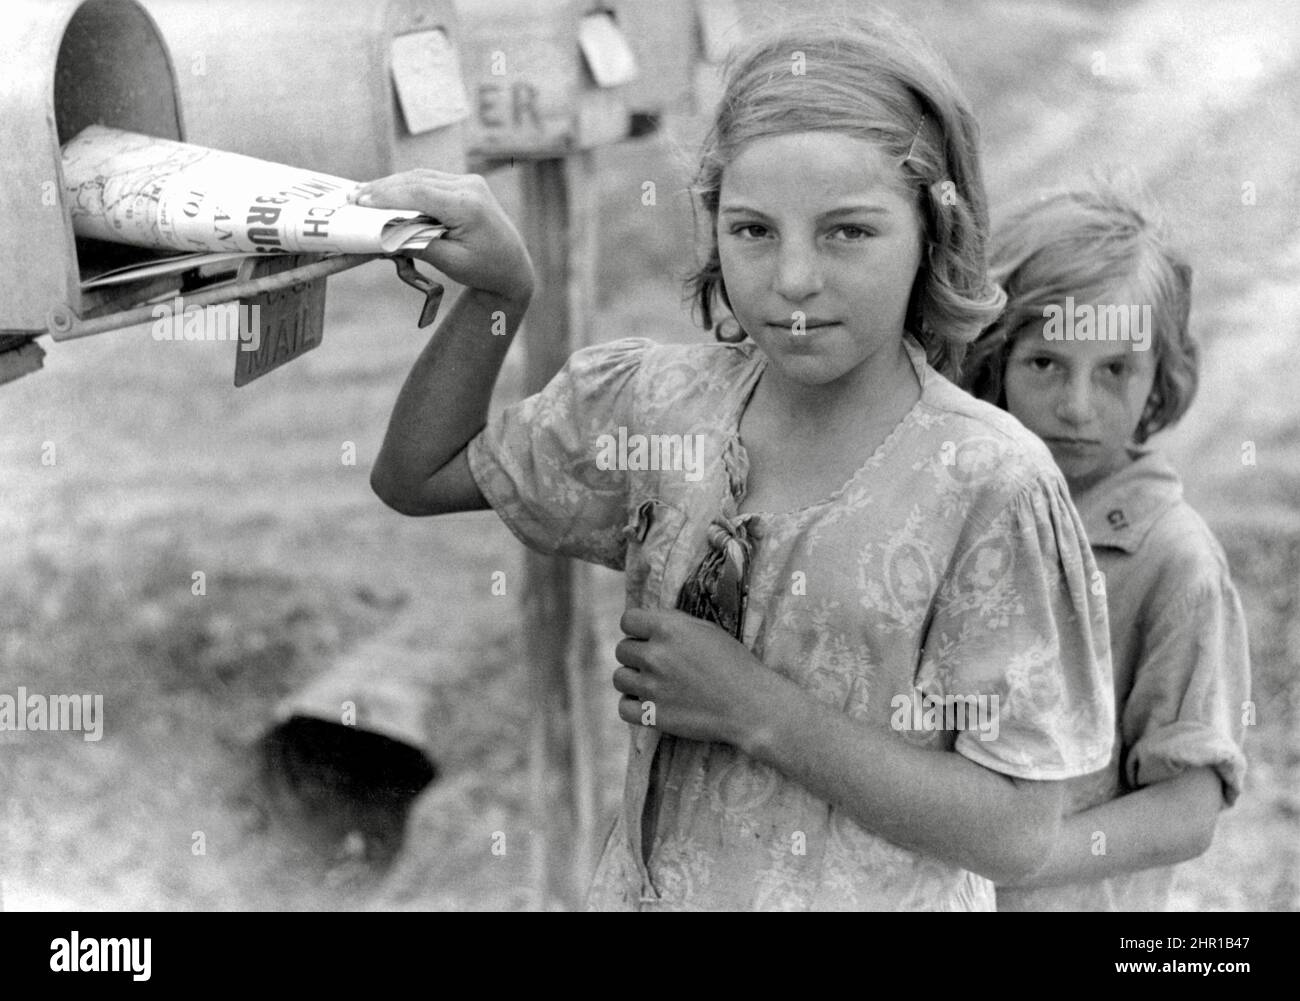 John Vachon - Ozark Children getting mail from mailbox - 1940 Stock Photo